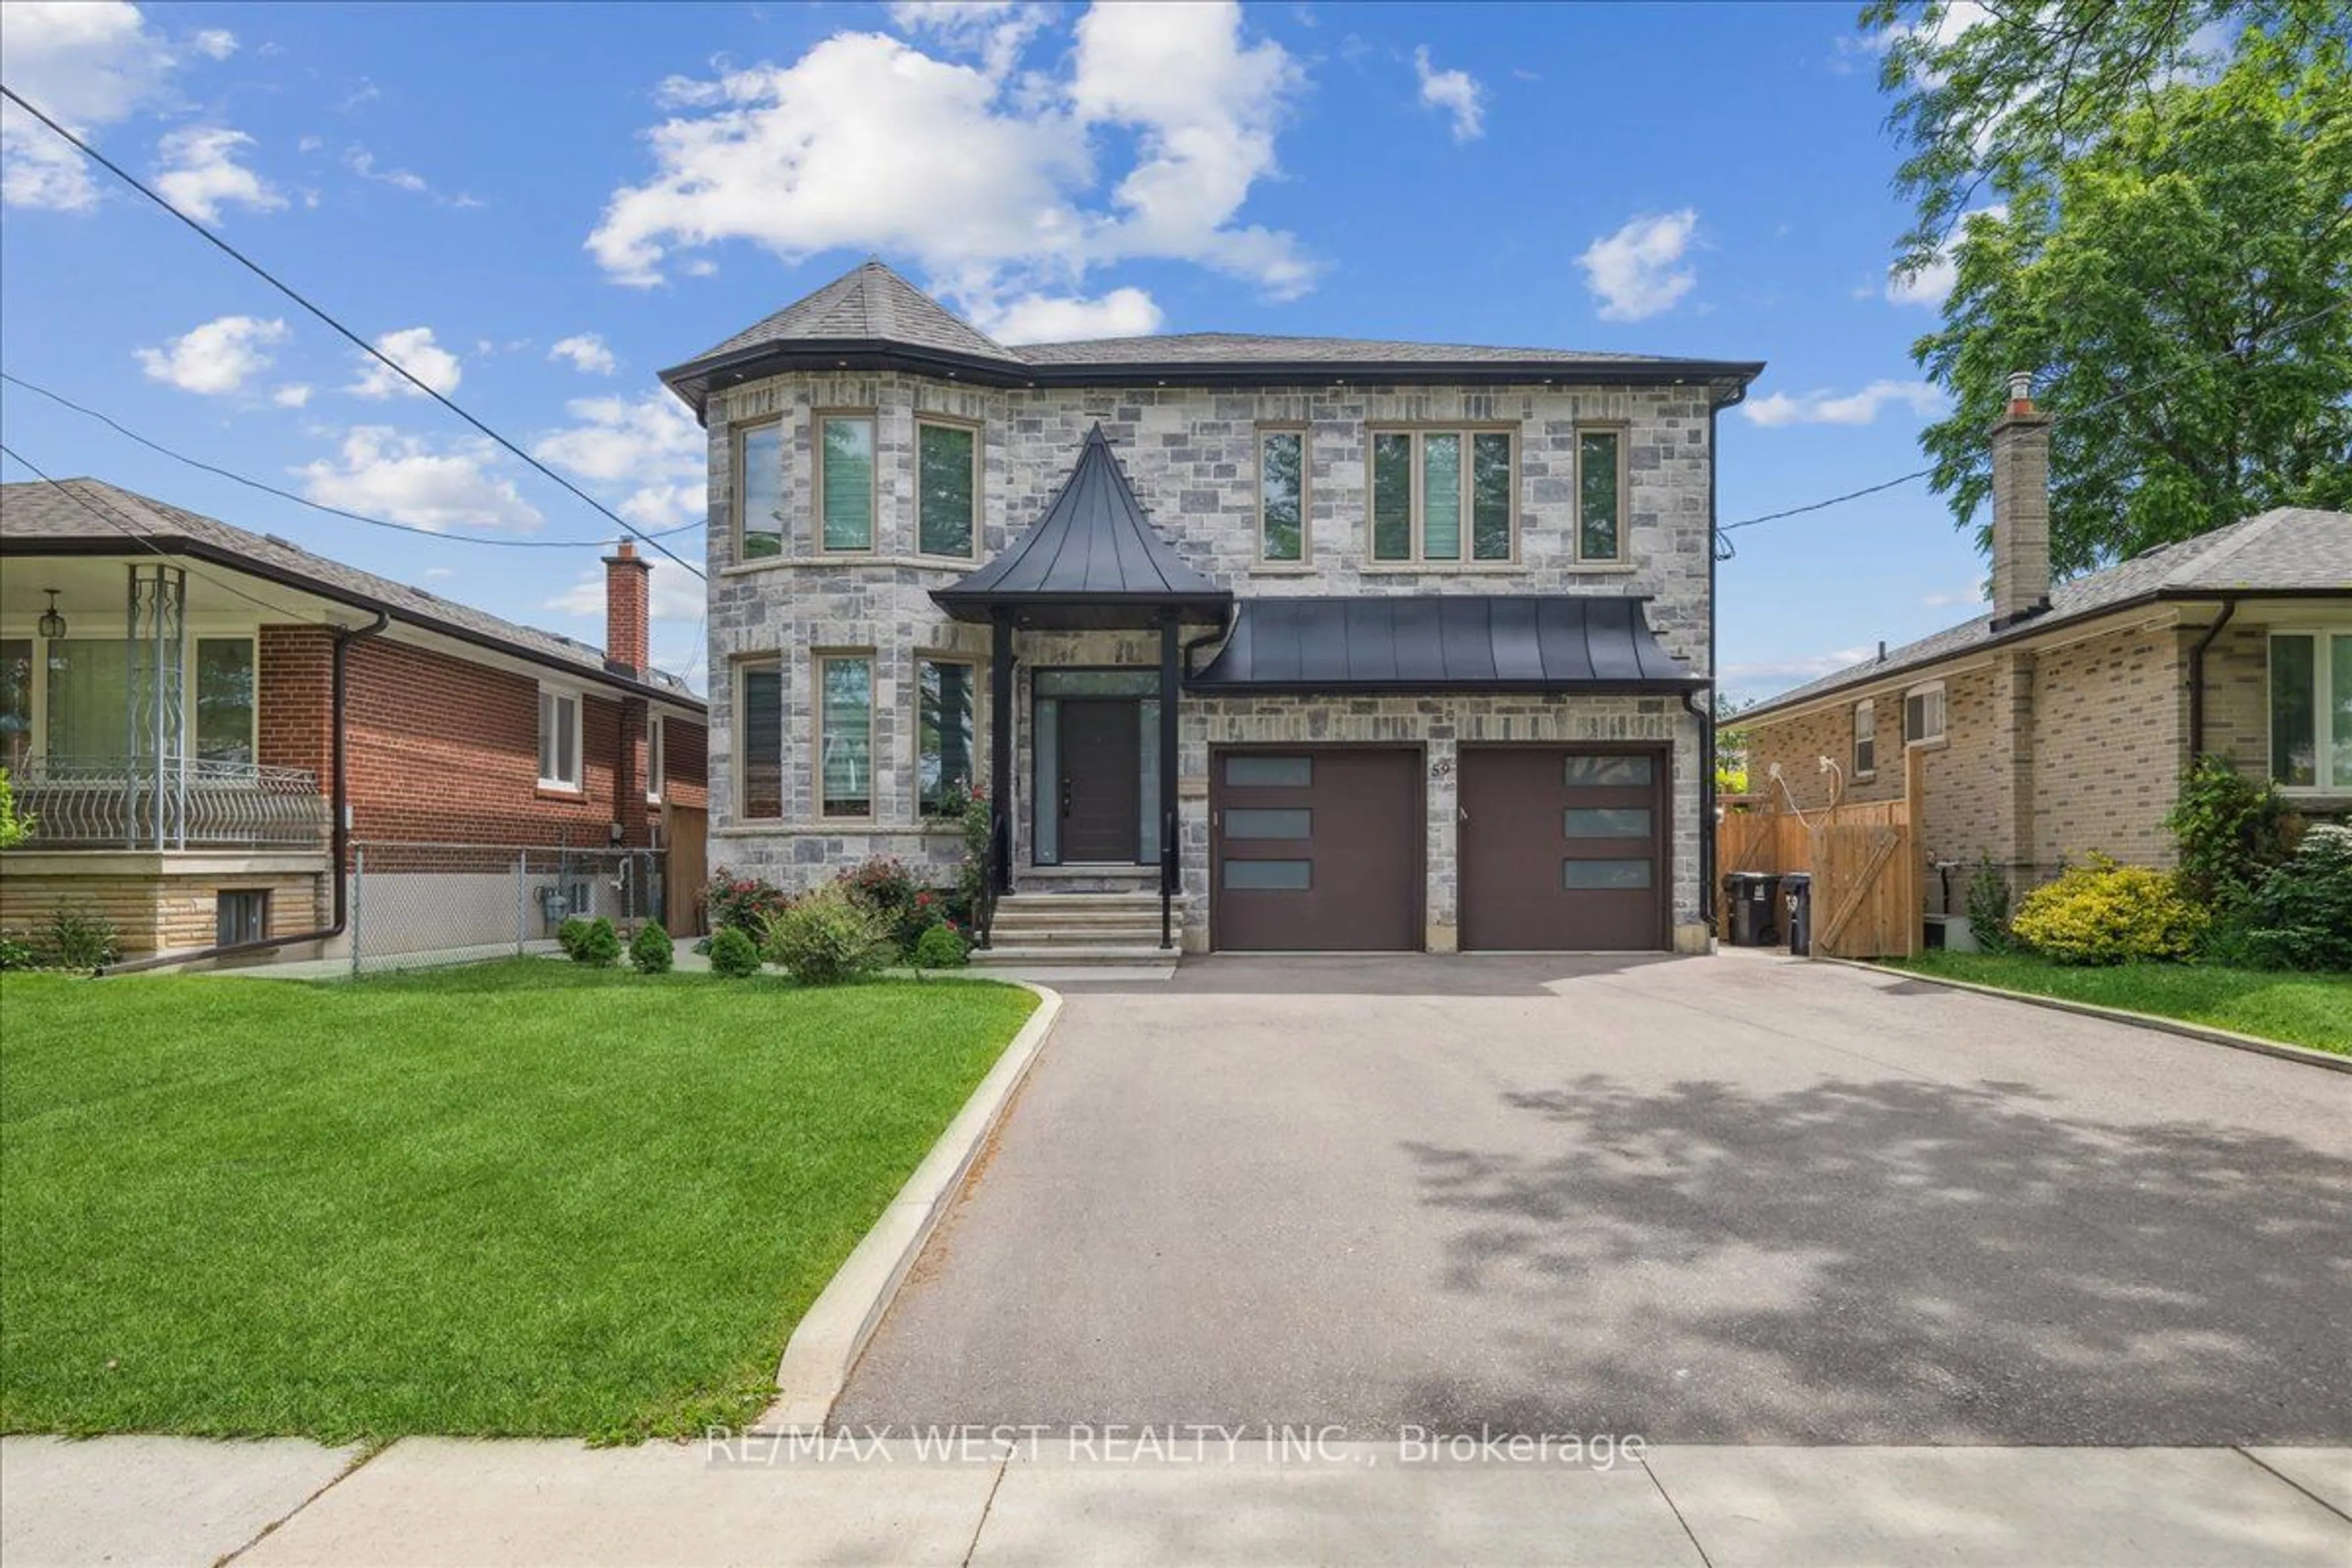 Home with brick exterior material for 59 Maniza Rd, Toronto Ontario M3K 1R8